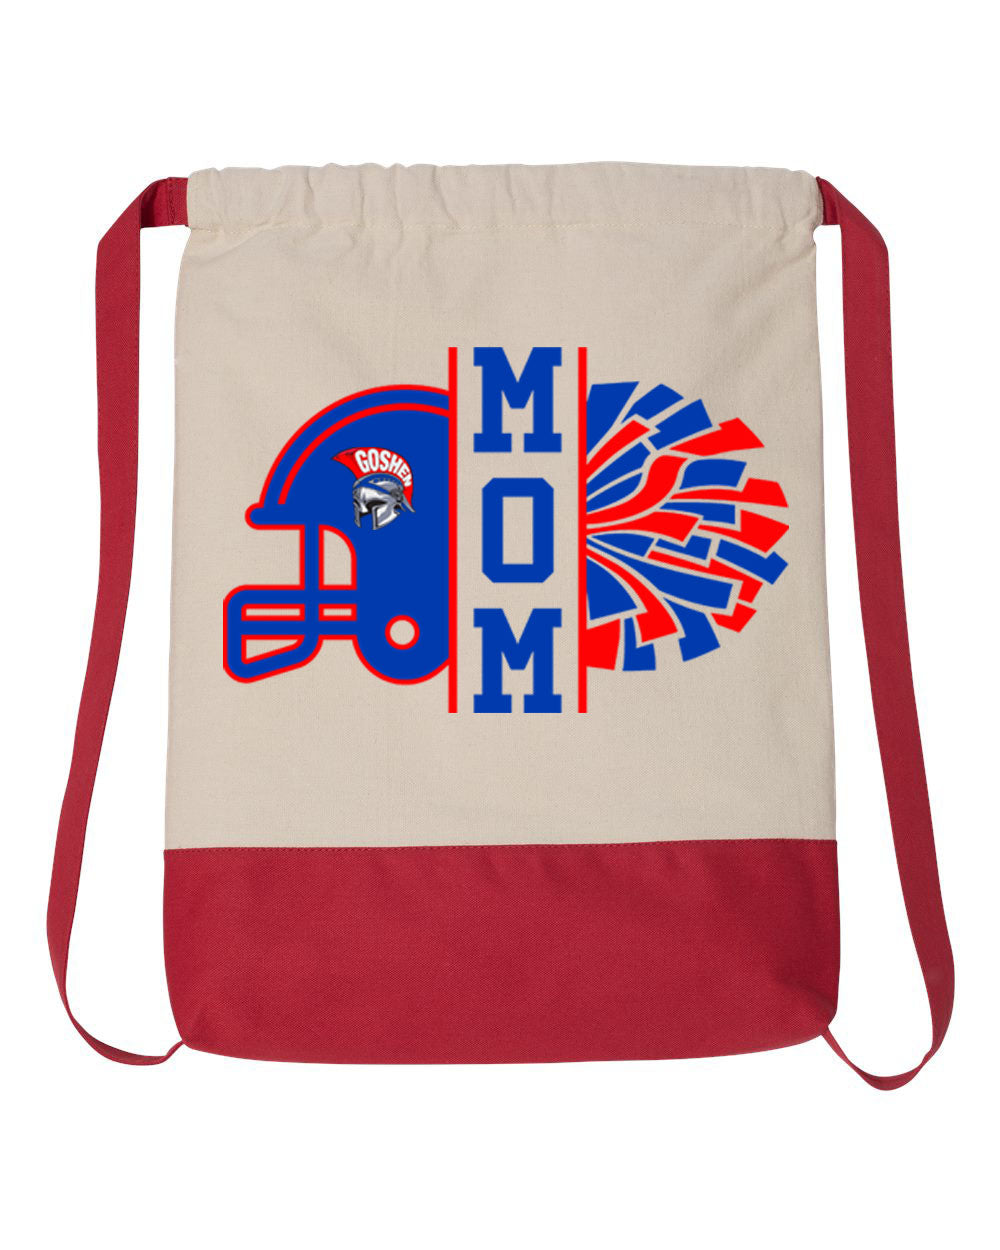 Goshen Cheer design 7 Drawstring Bag